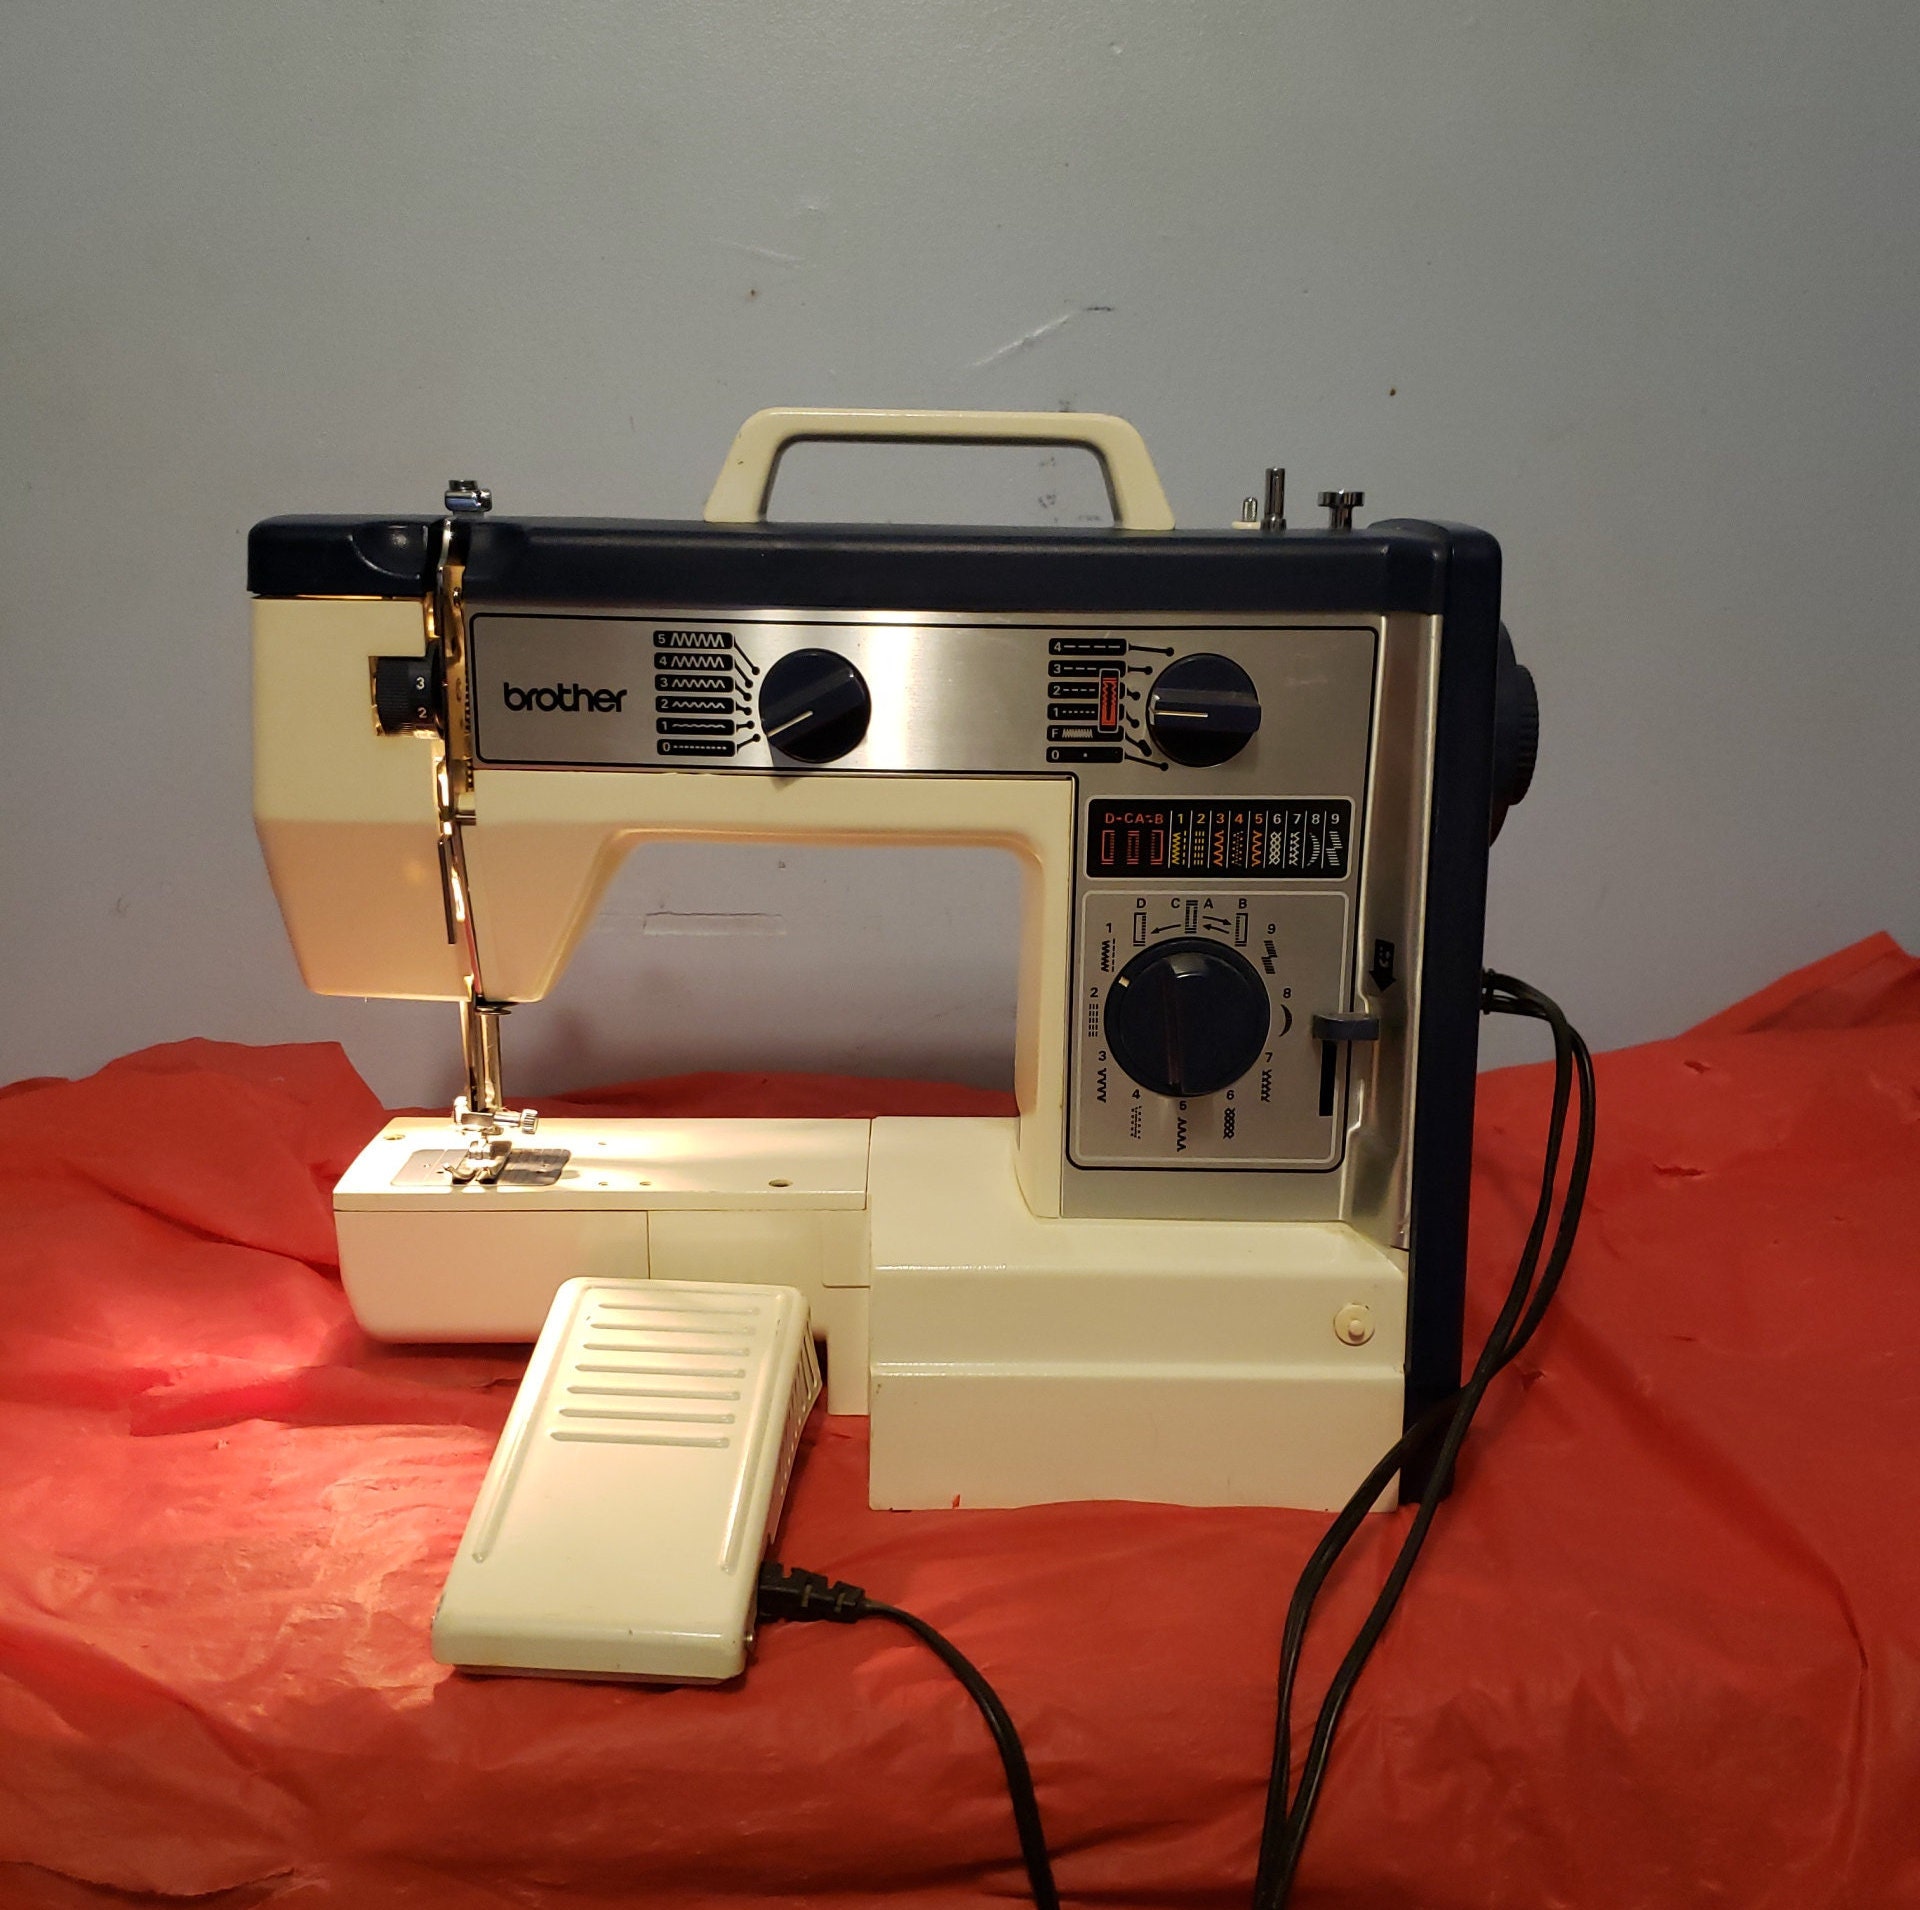 Vintage brother sewing machine : r/sewing